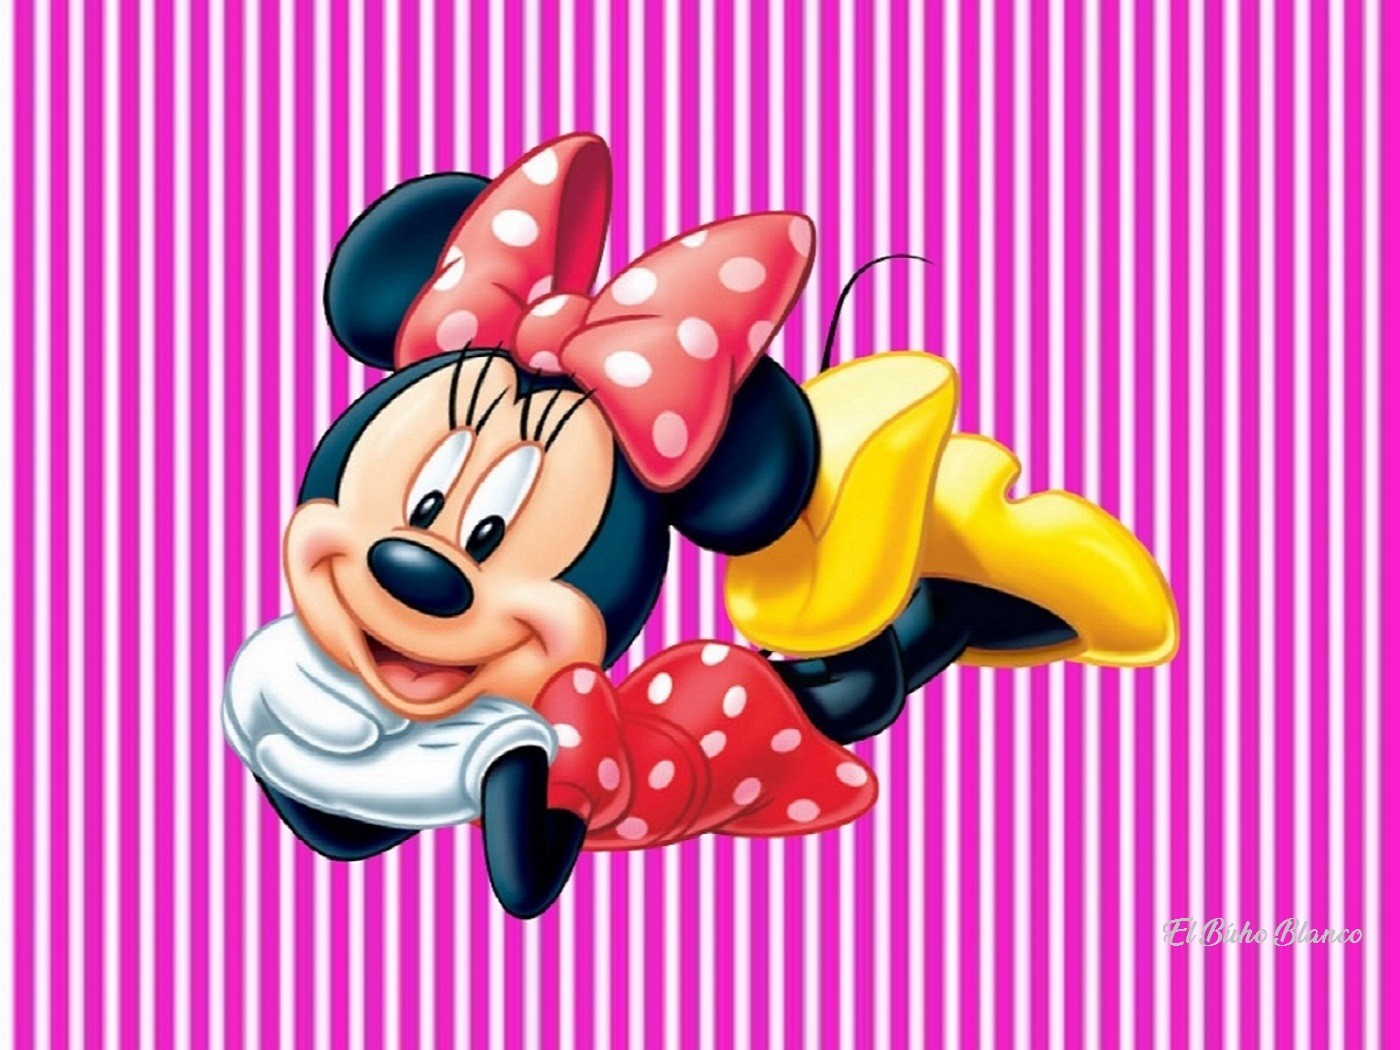 Minnie